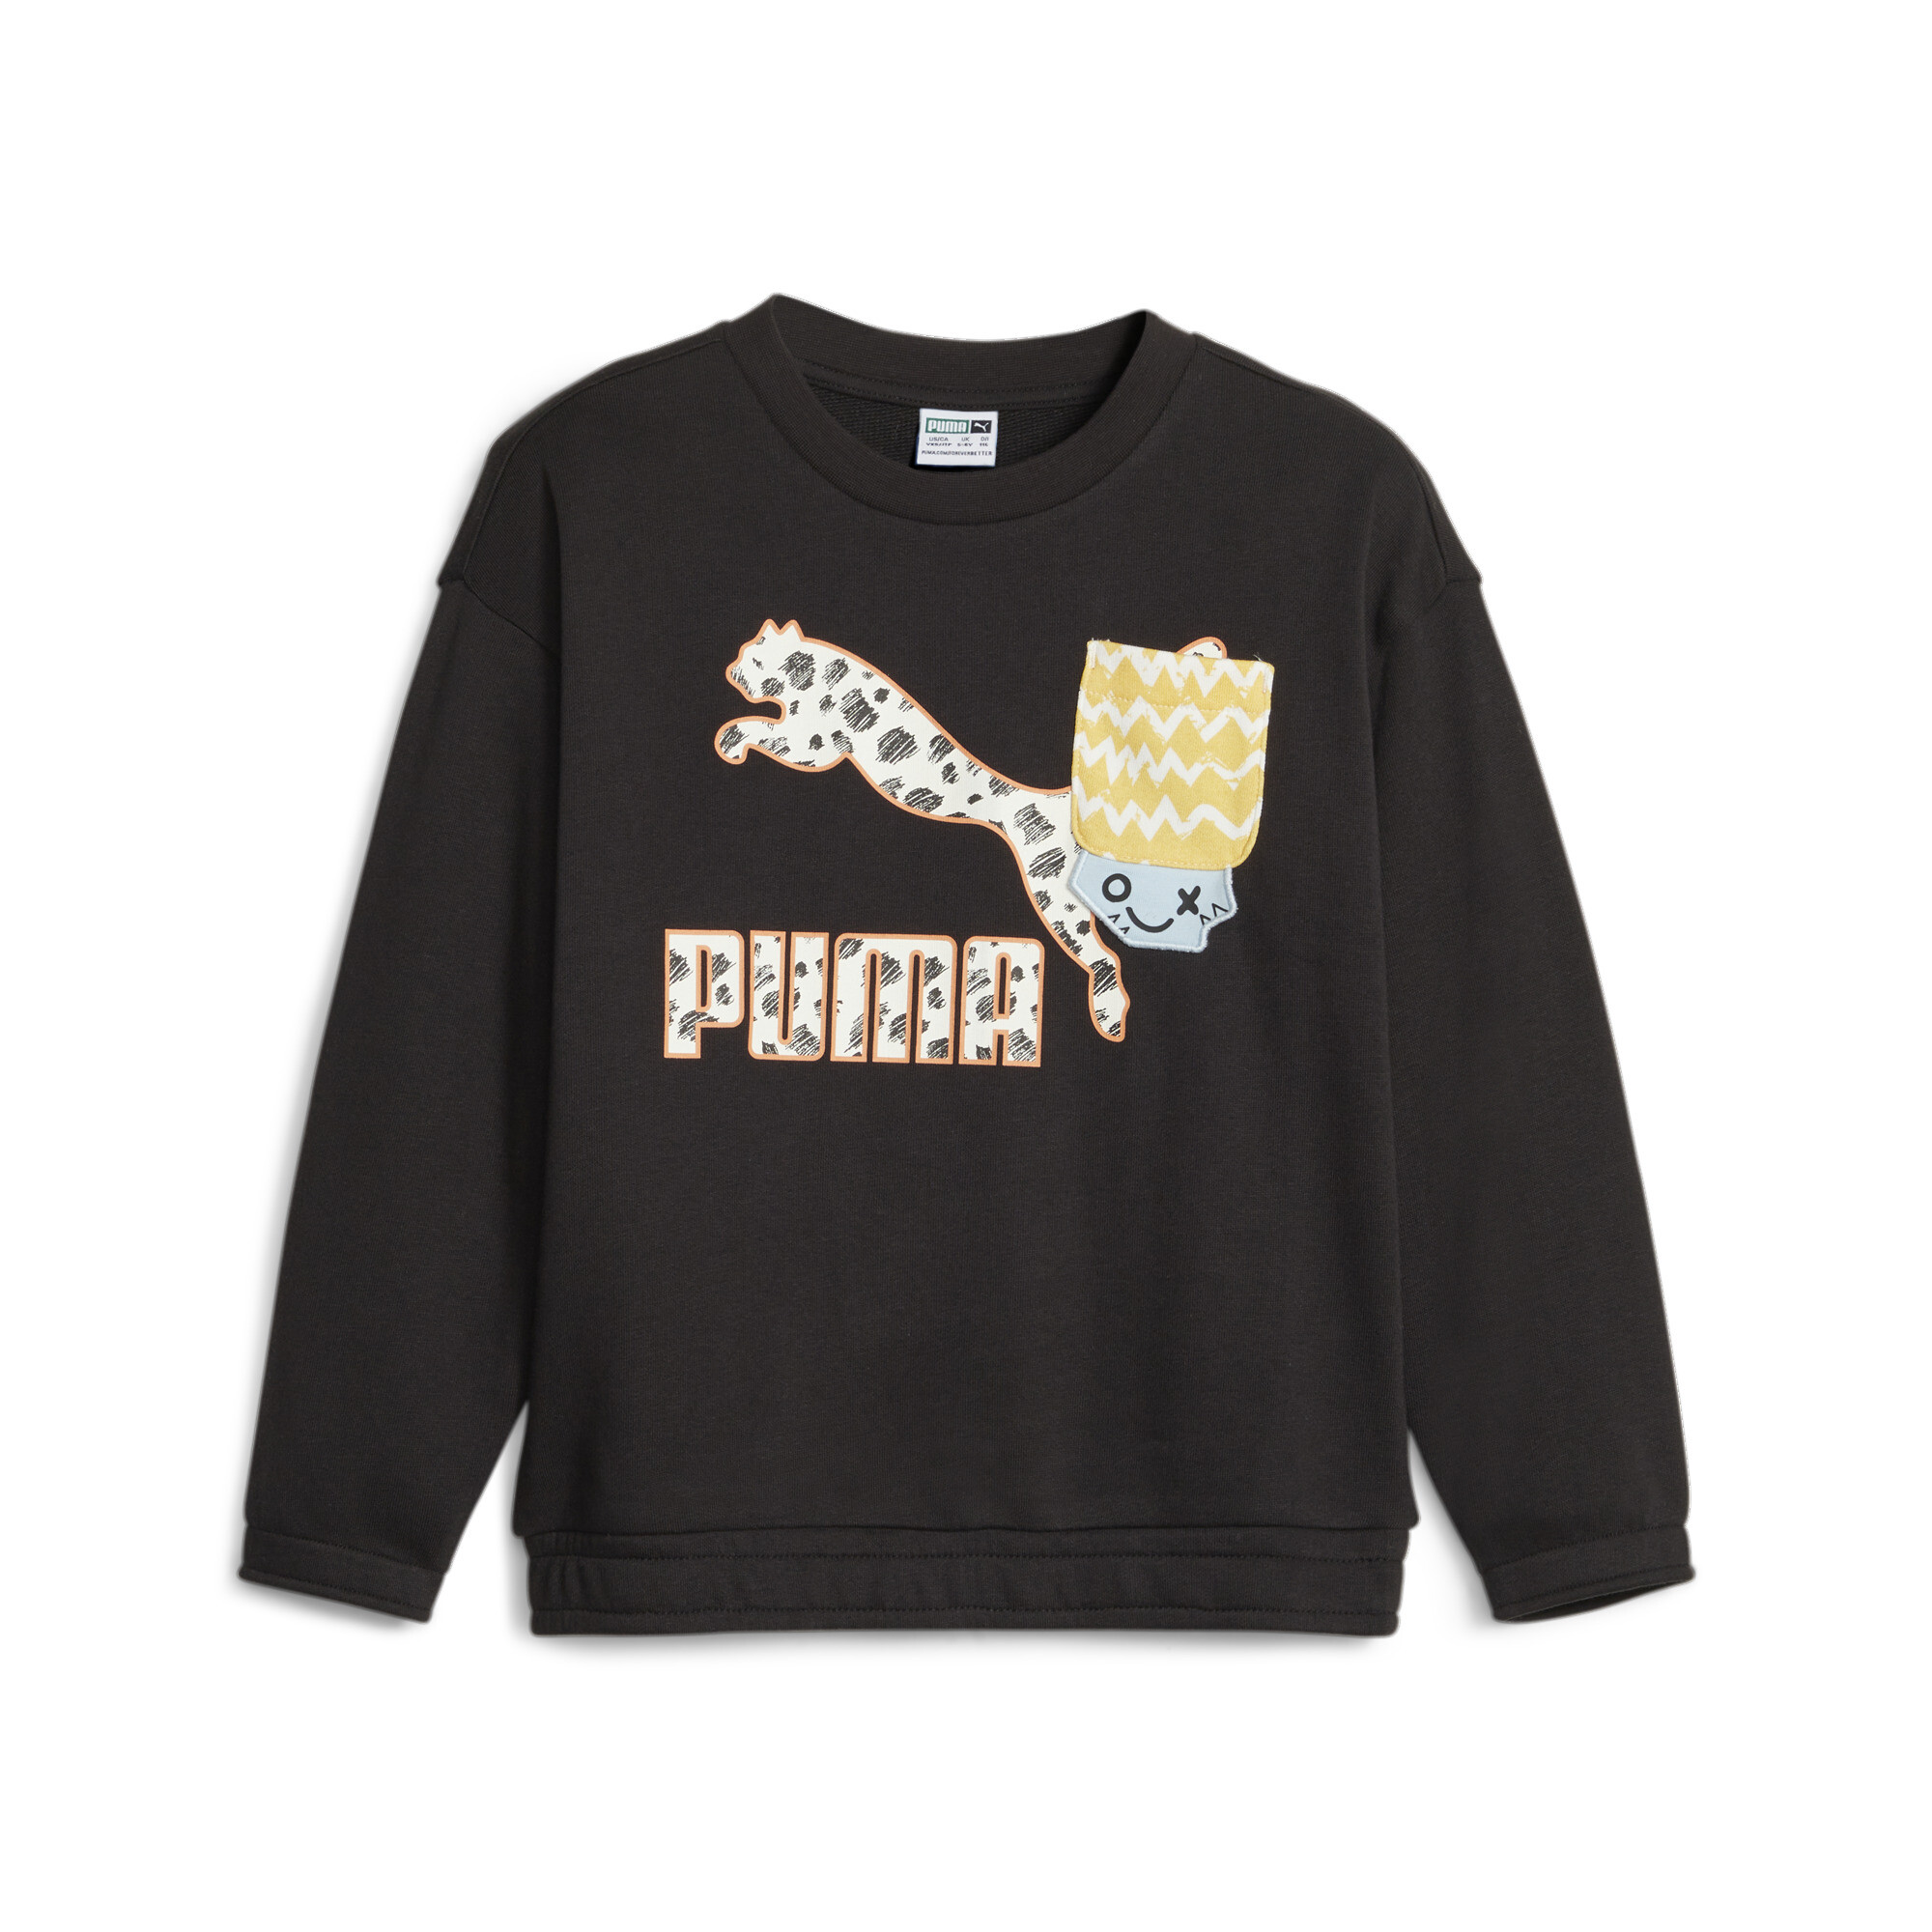 PUMA Classics Mix Match Sweatshirt In Black, Size 7-8 Youth